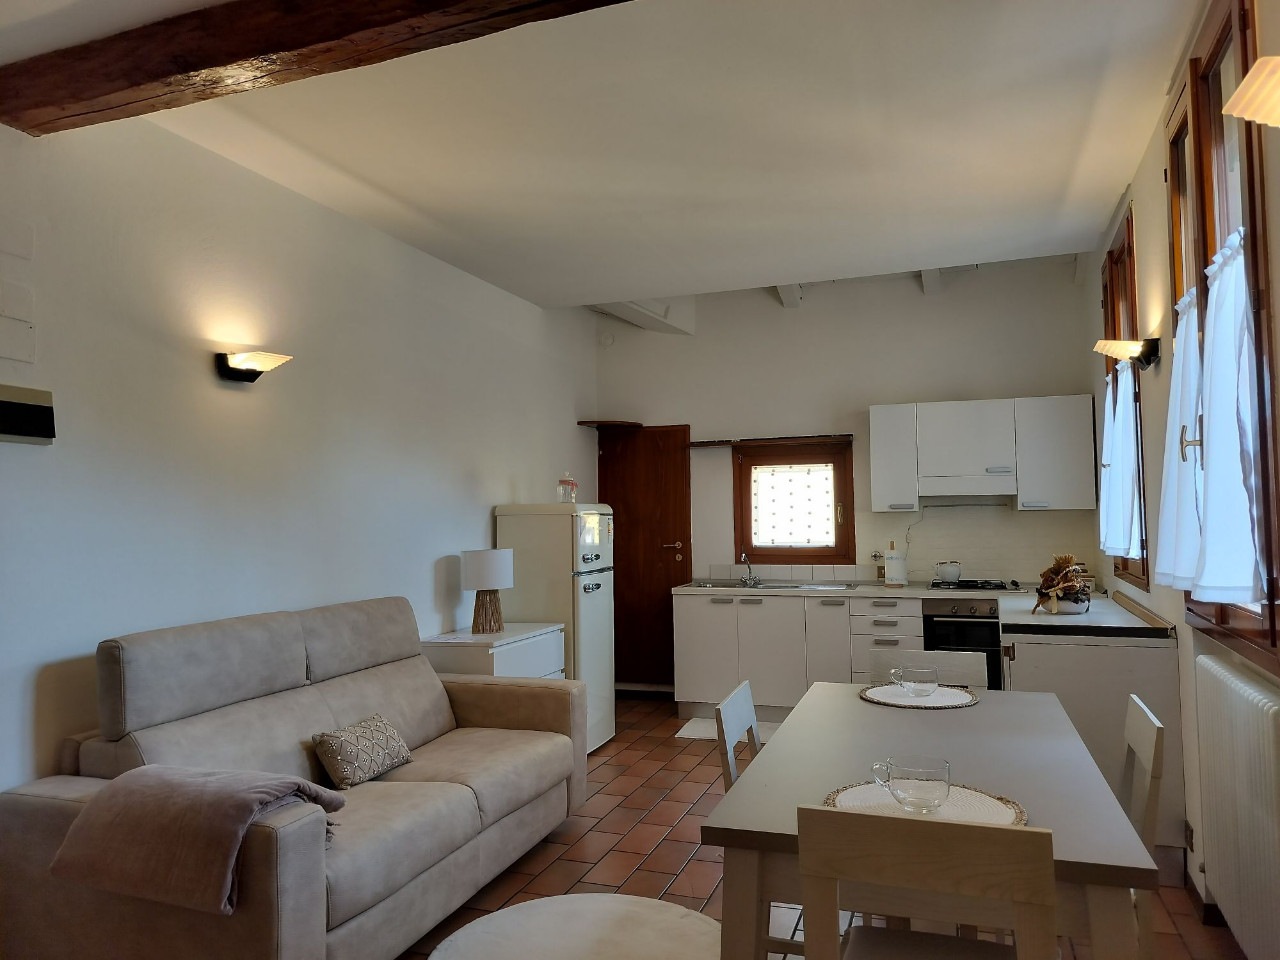 Affitto - Appartamento - Sant Isaia - Bologna - € 800